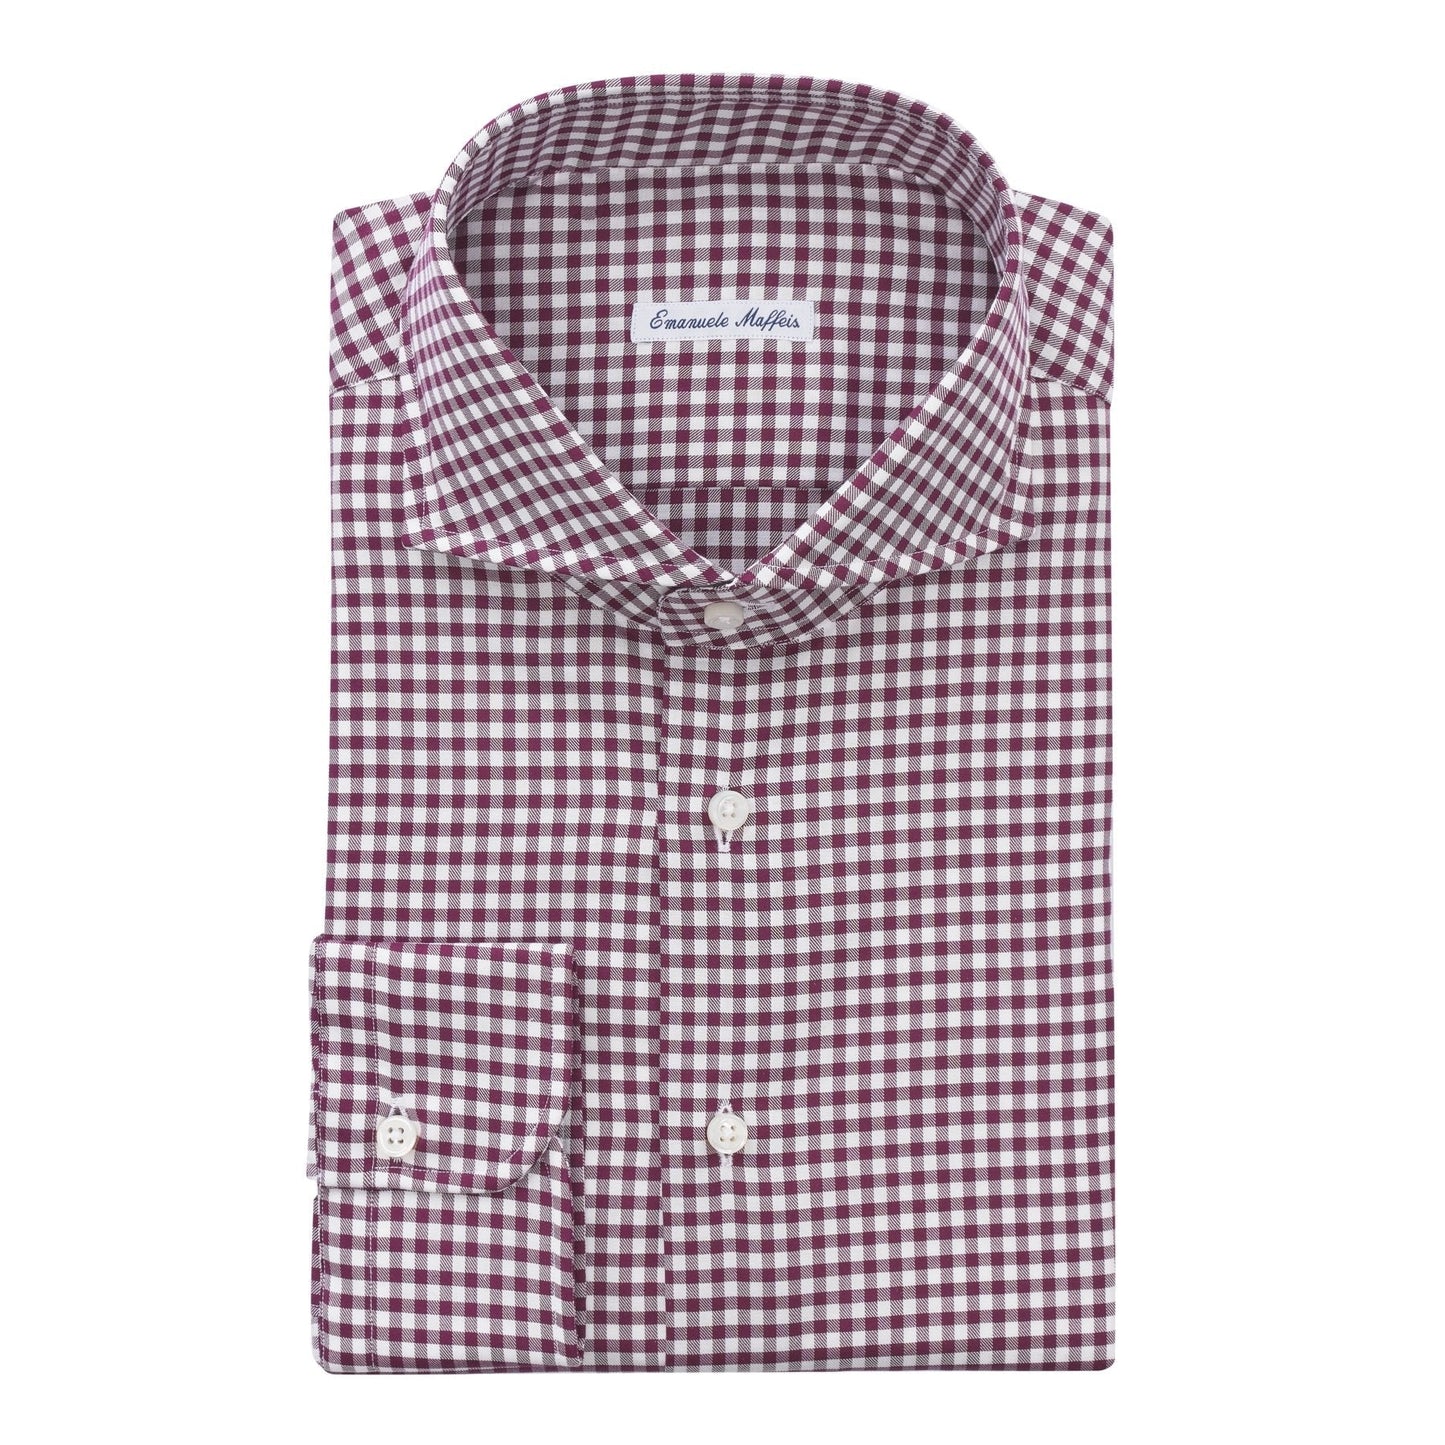 Emanuele Maffeis Gingham-Check Cotton Burgundy Shirt with Shark Collar - SARTALE